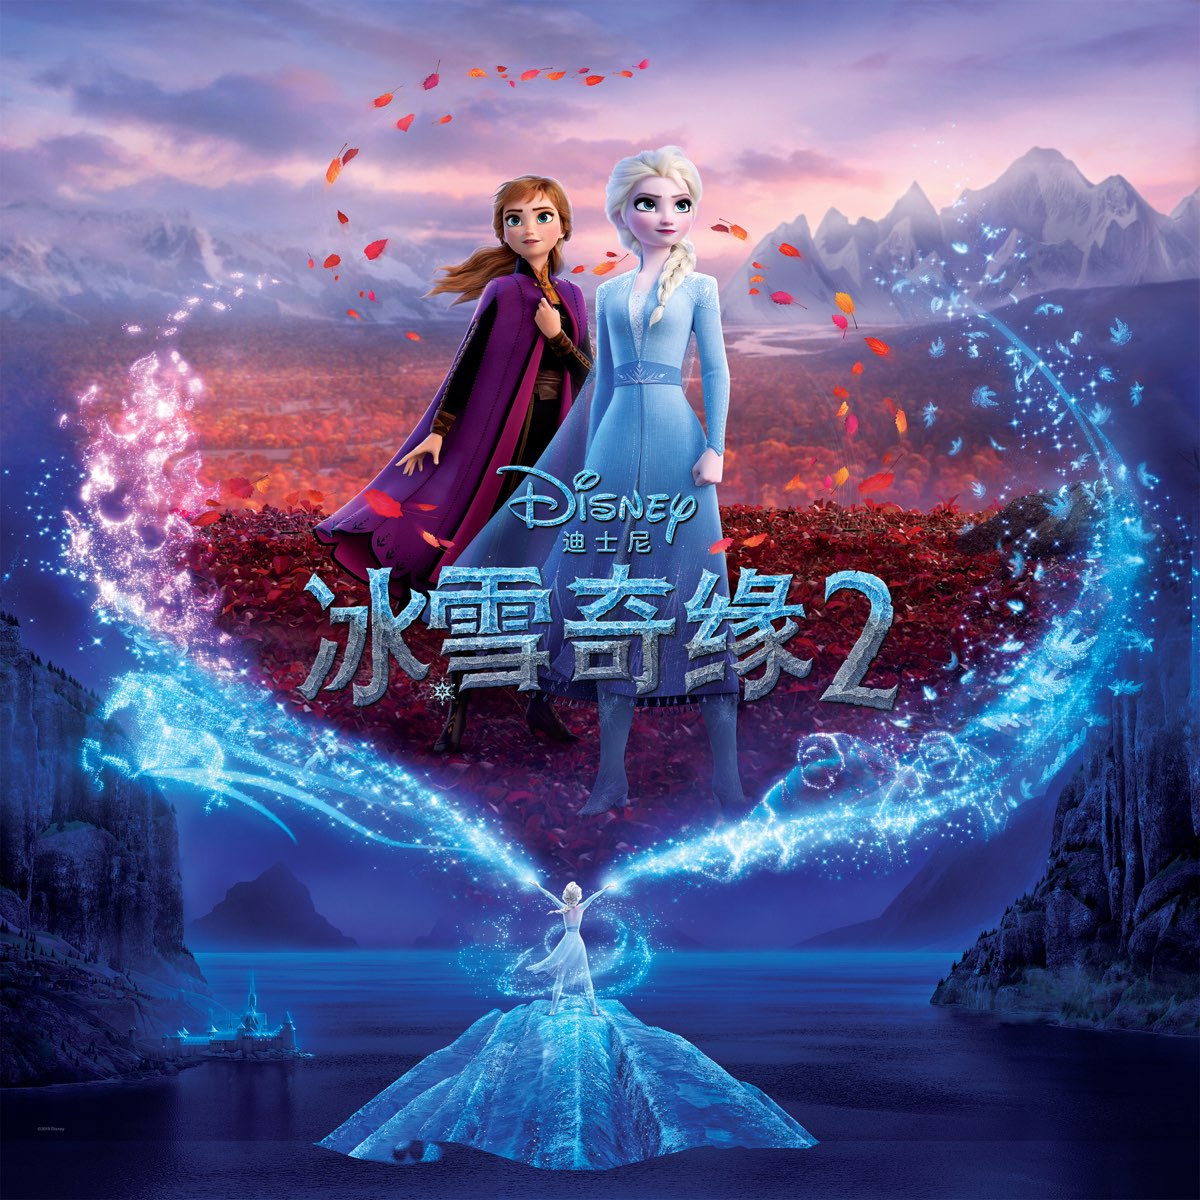 ‎Frozen 2 (Mandarin Original Motion Picture Soundtrack) by Kristen ...